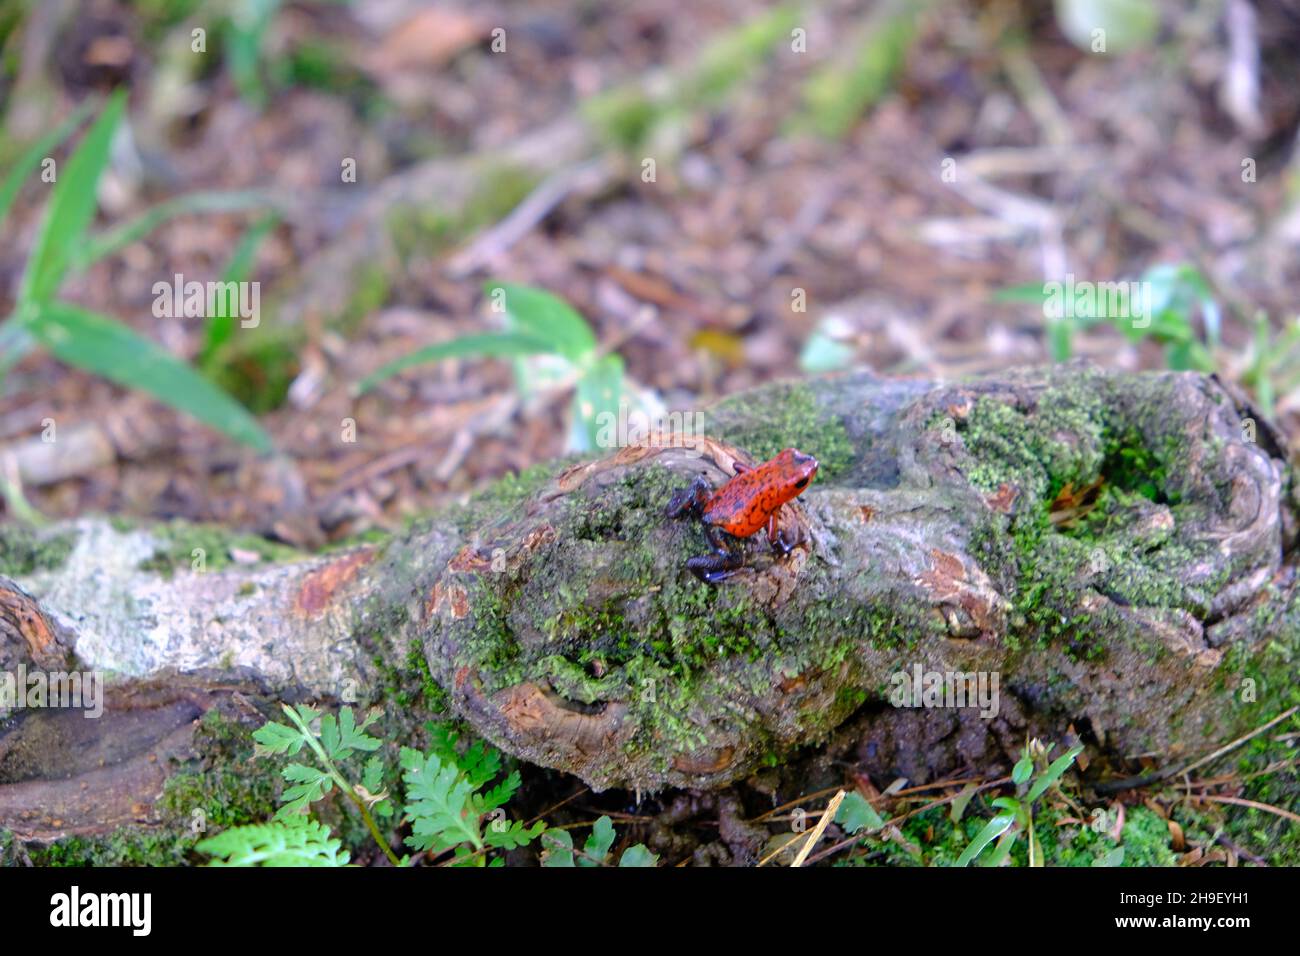 Costa Rica Tortuguero National Park - Parque Nacional Tortuguero - Red poison dart frog - Dendrobatidae Stock Photo